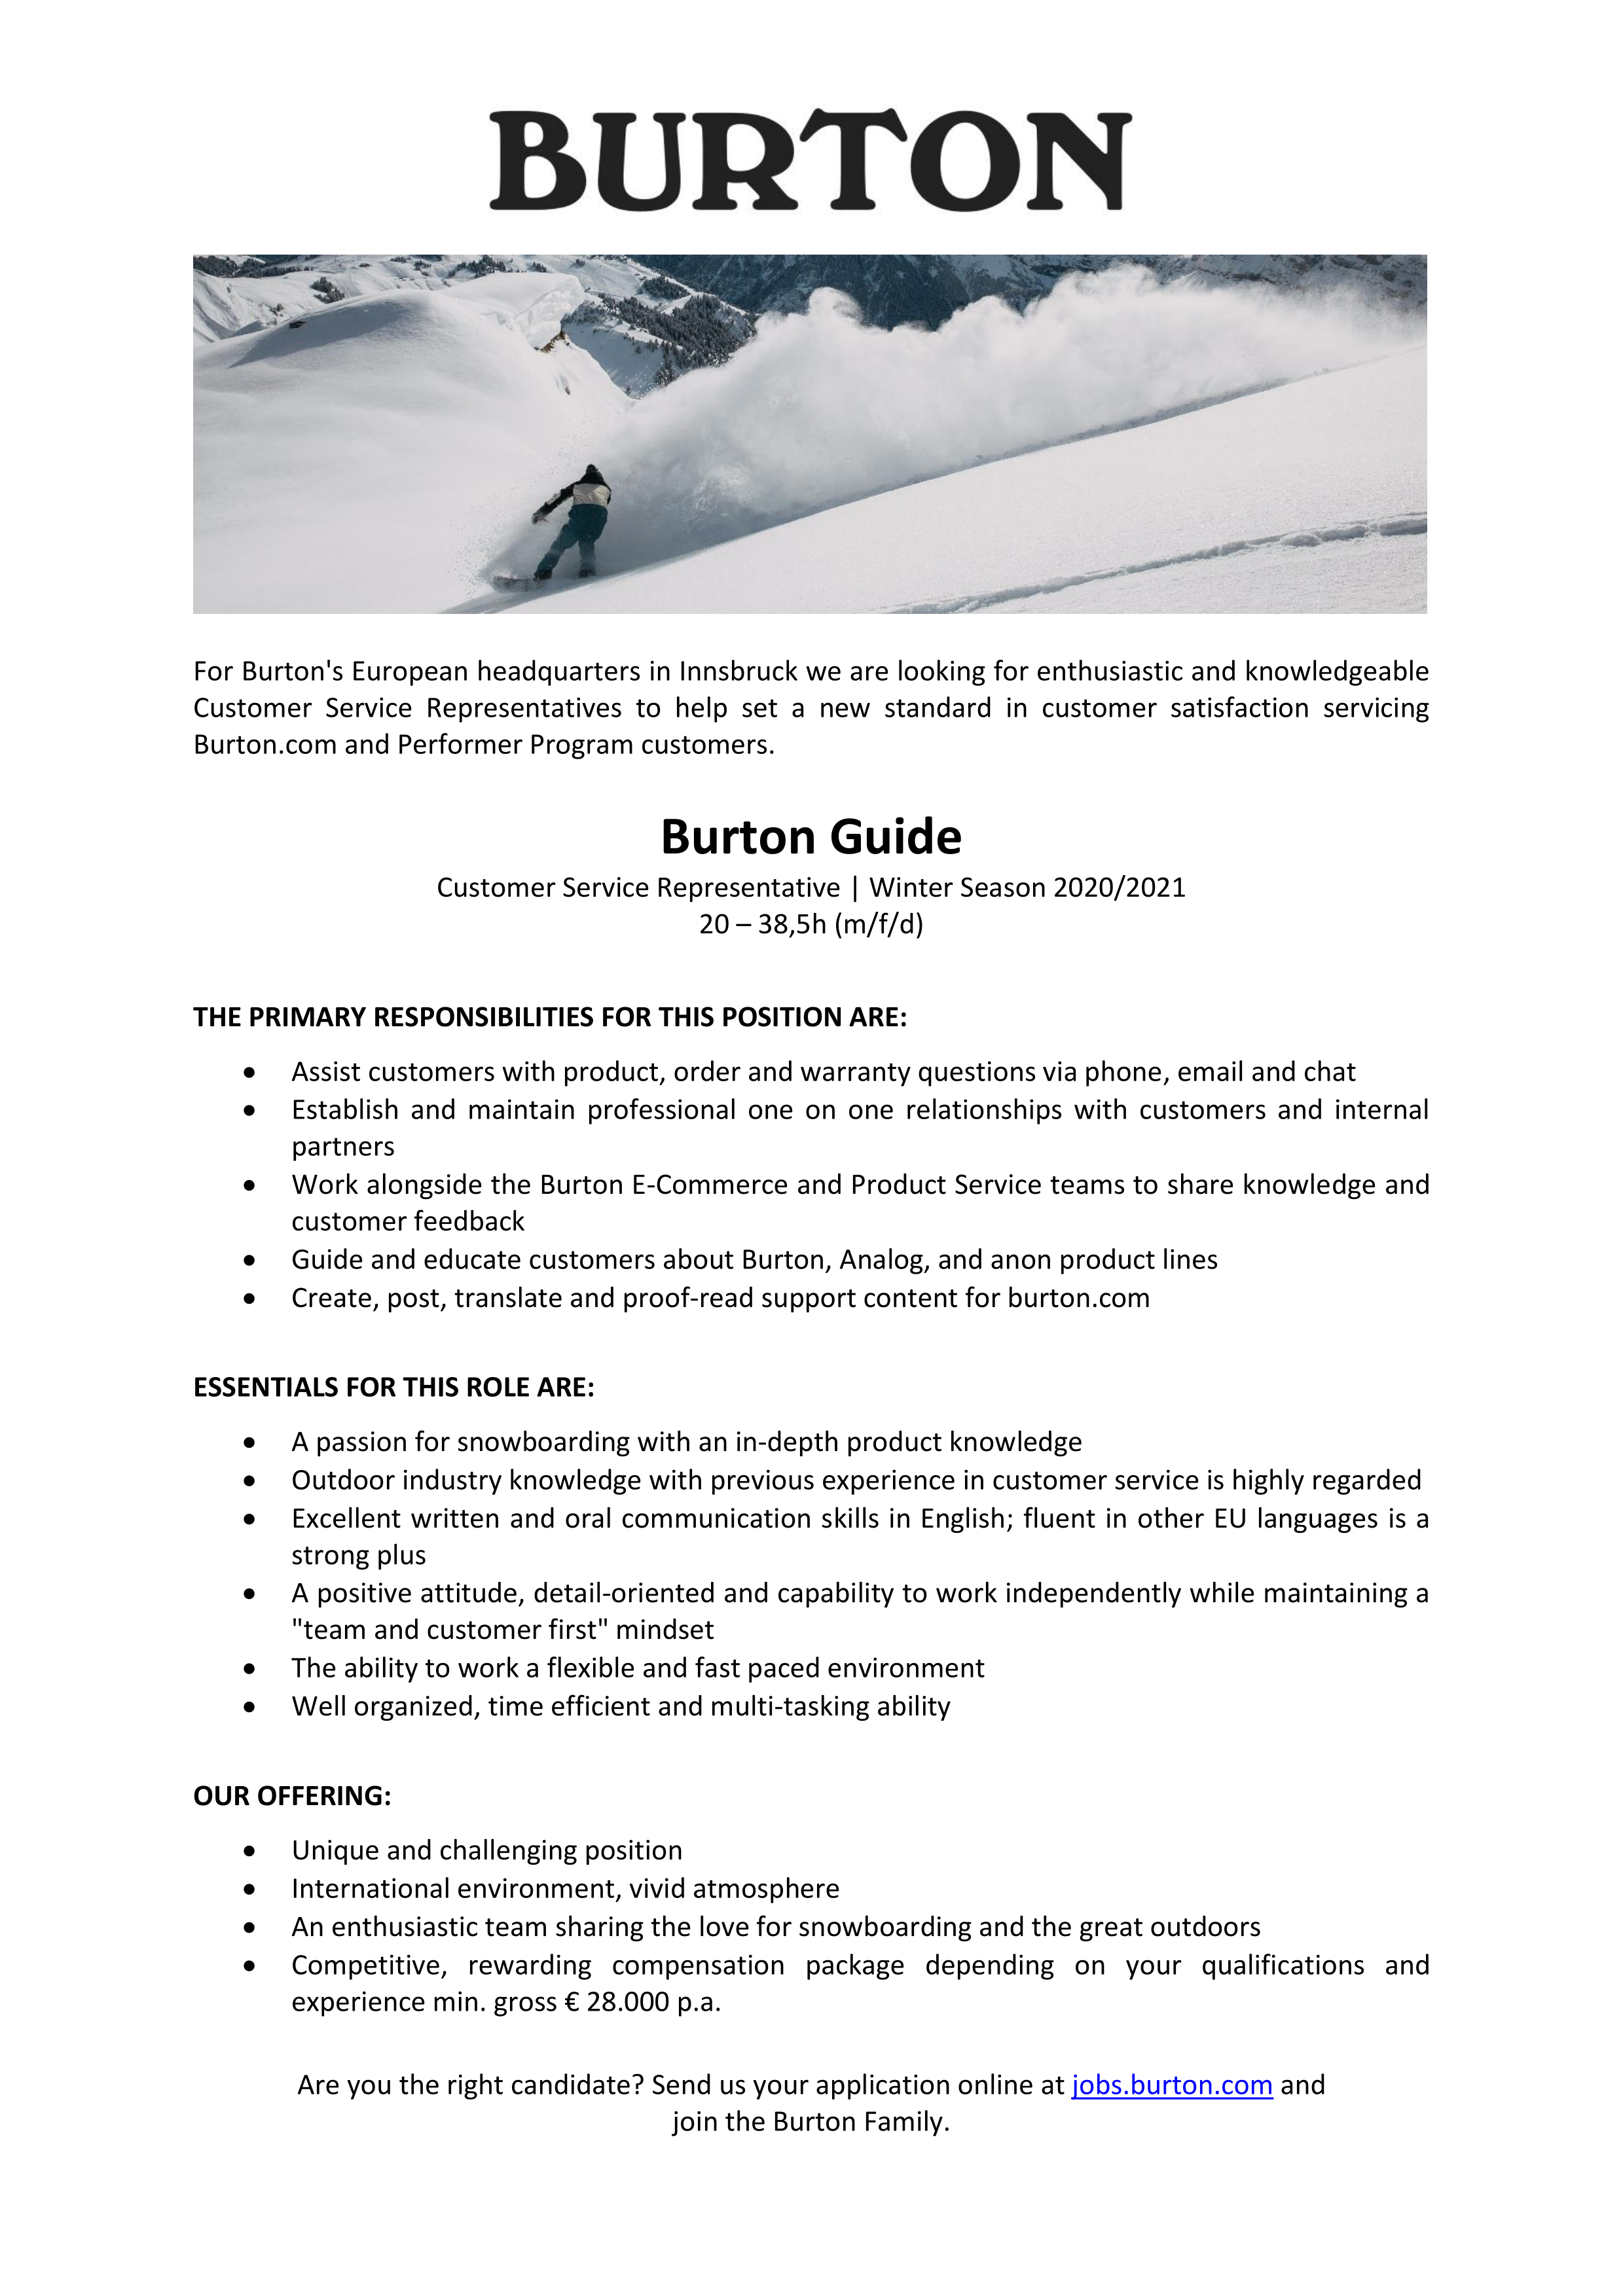 Customer Service Representative - Burton Guide (m/w/d) 20-38,5 h